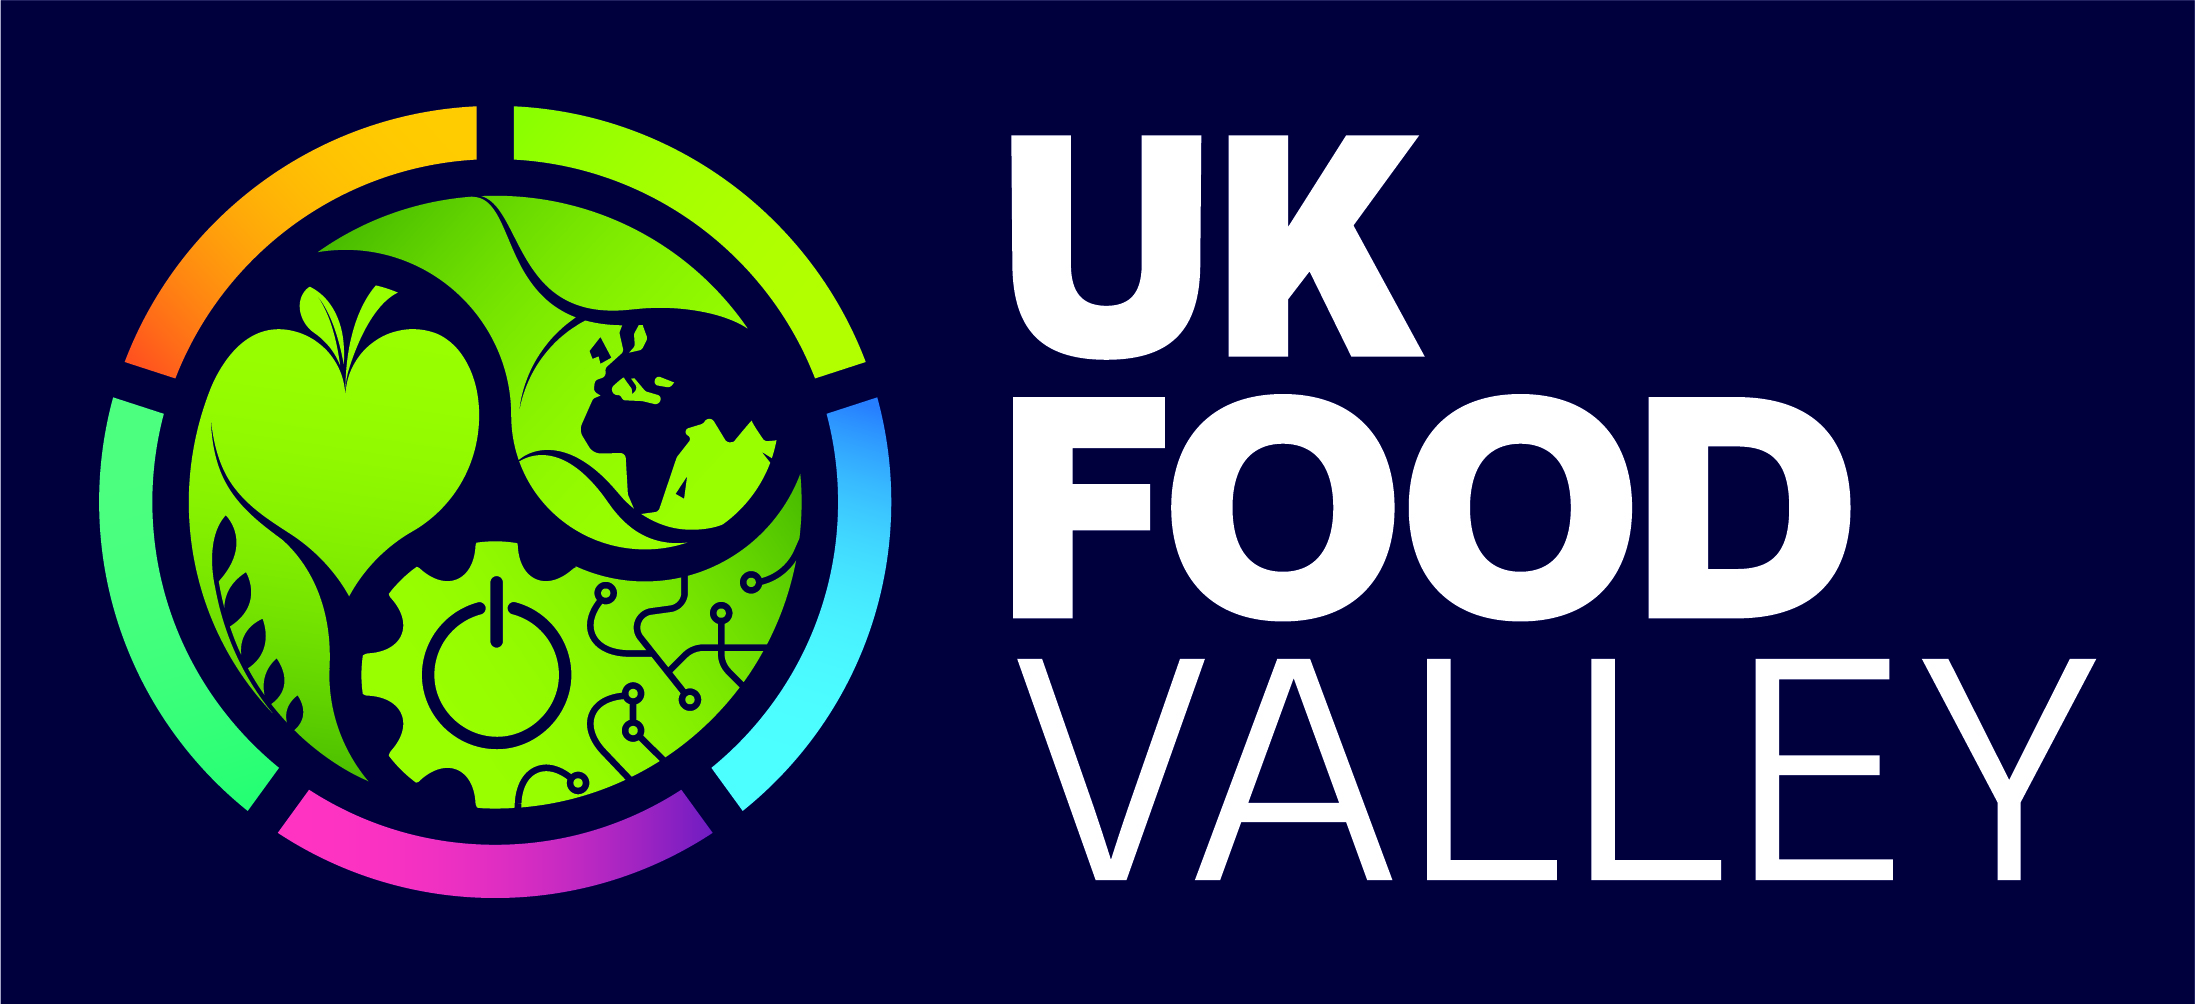 Uk food valley logo cmyk rev